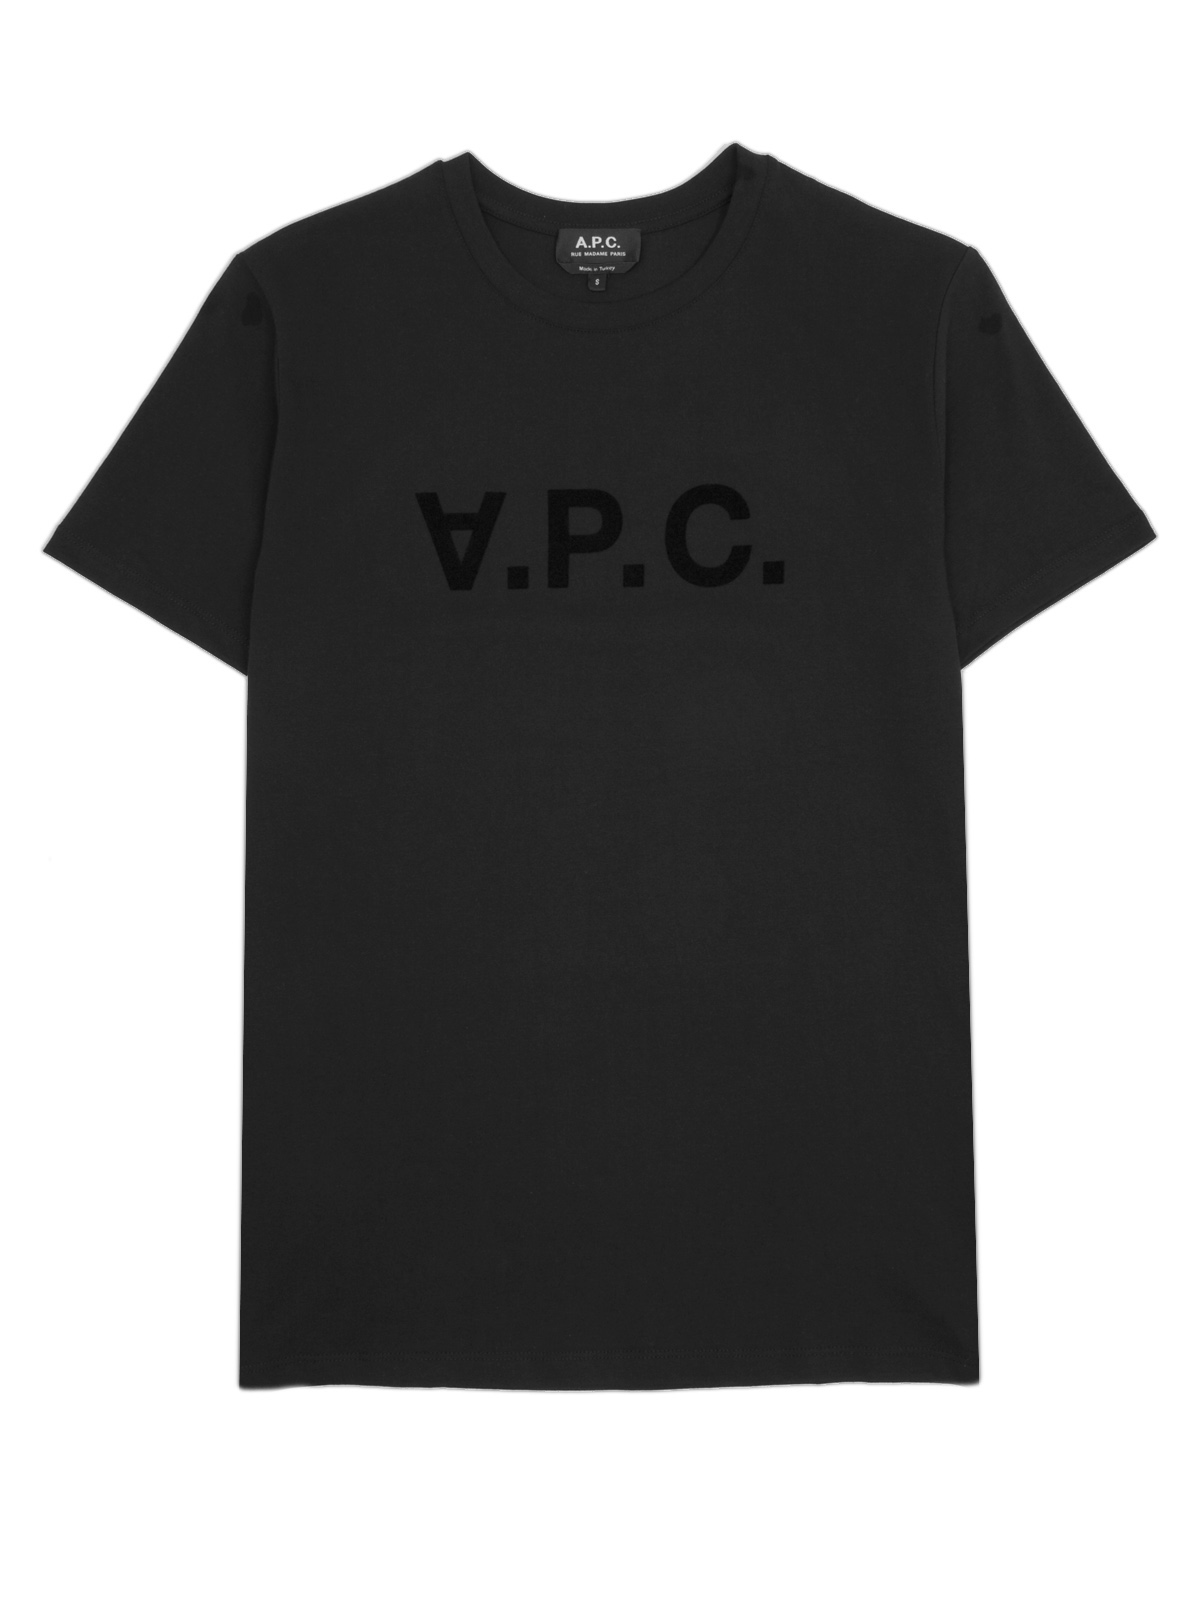 A P C T Shirt V P C Black Nk